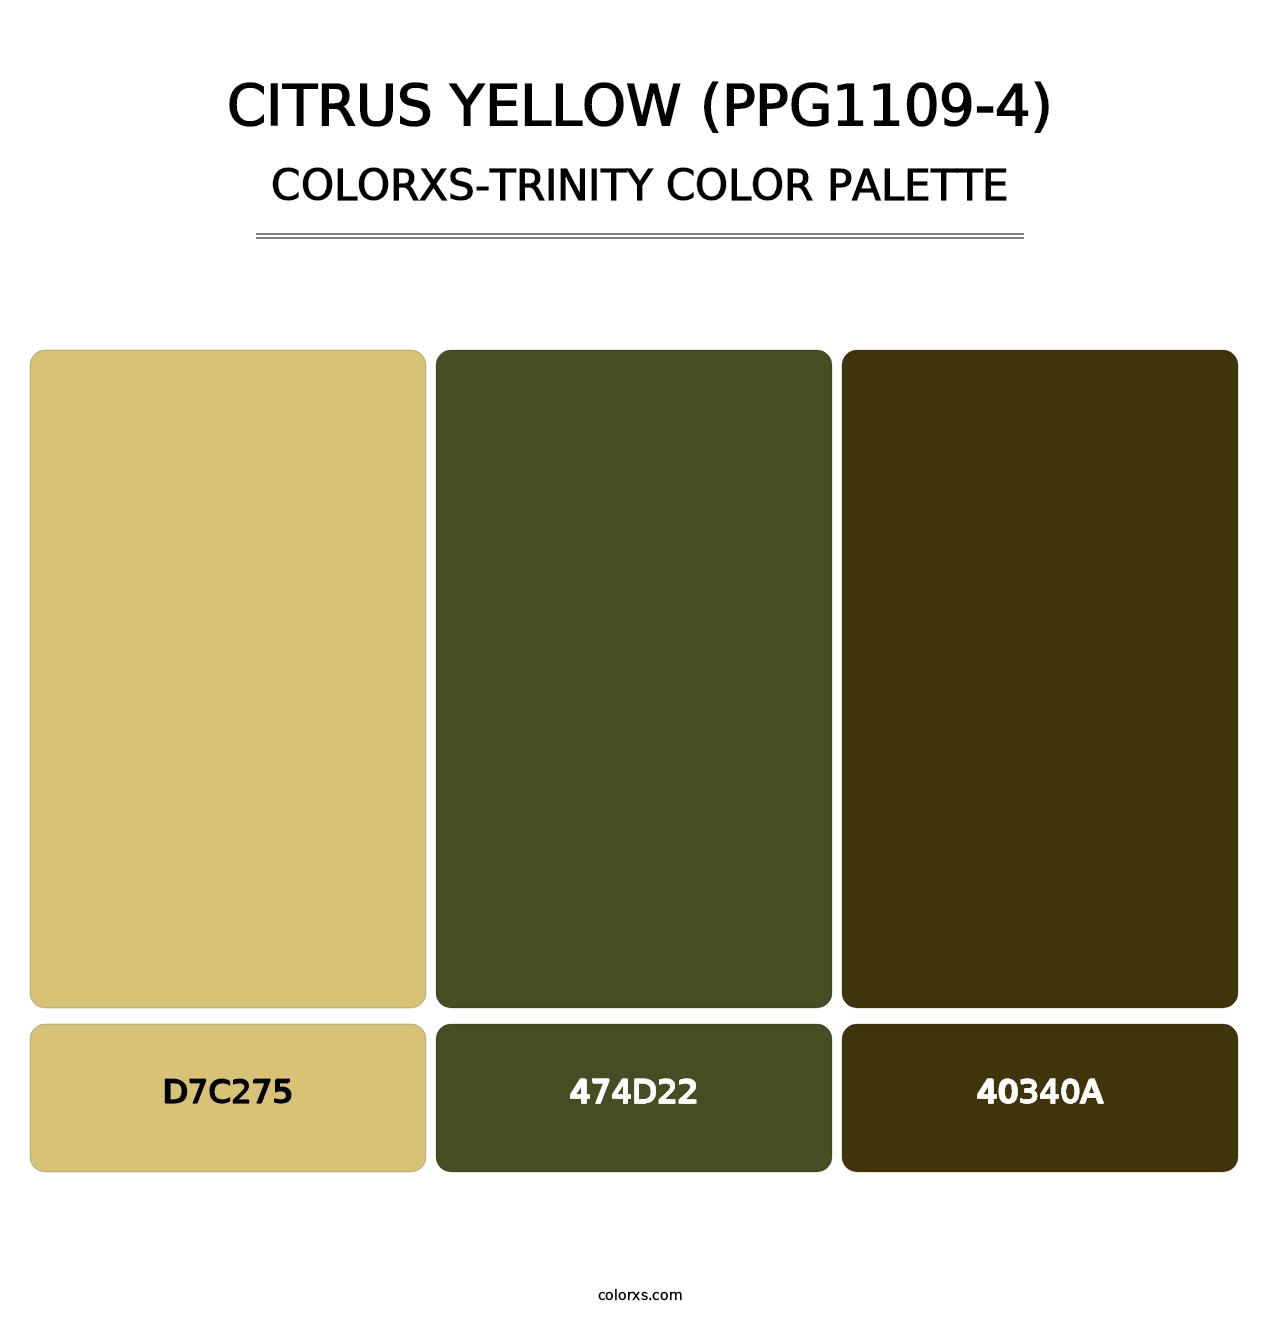 Citrus Yellow (PPG1109-4) - Colorxs Trinity Palette